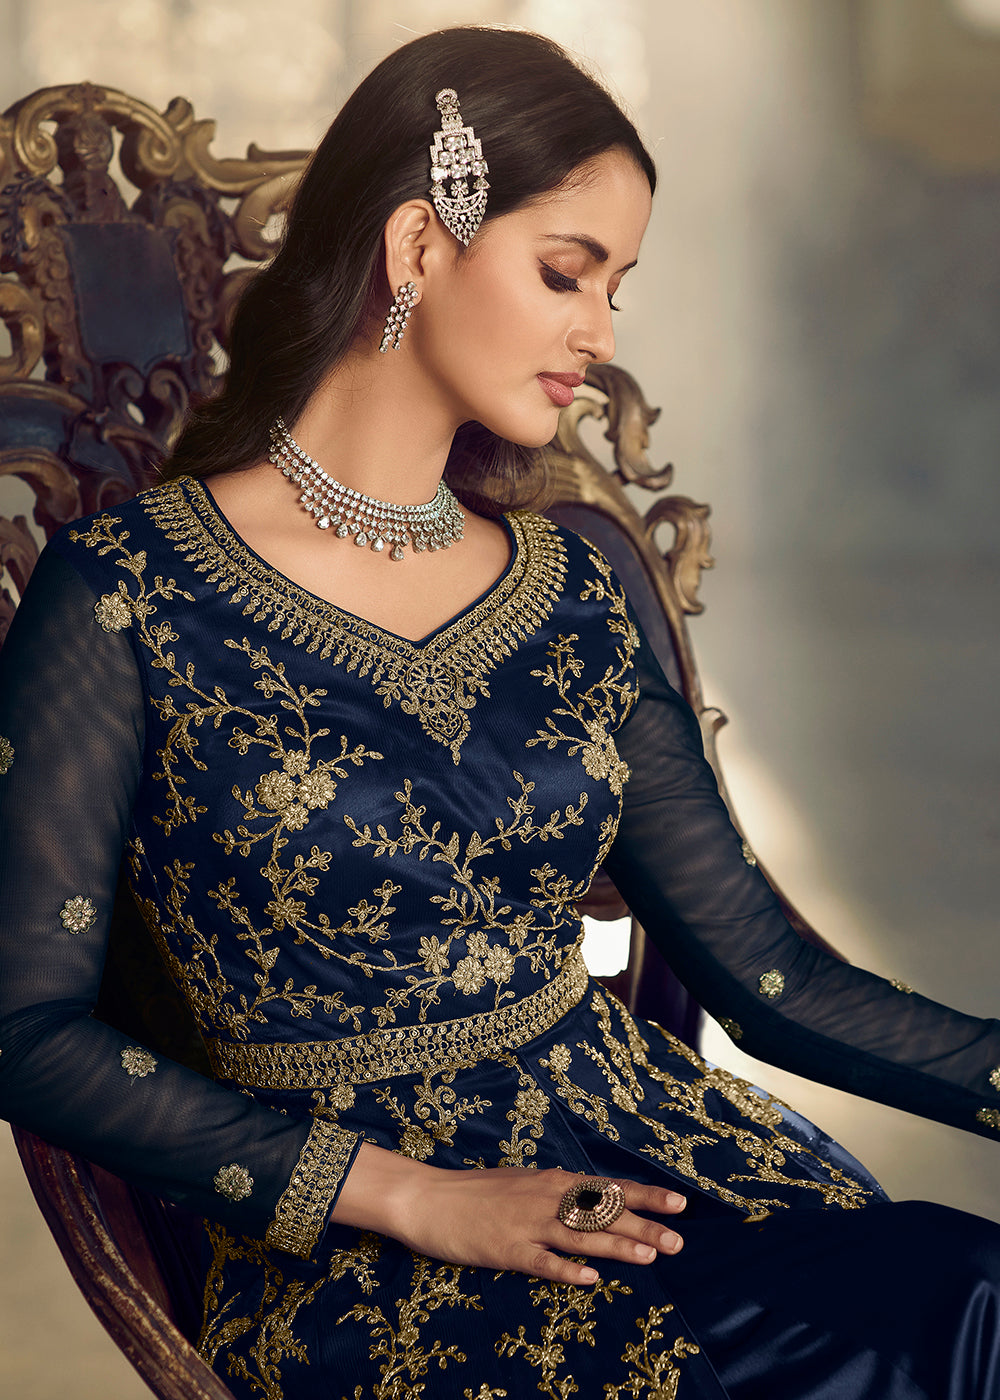 Buy Now Navy Blue Wedding Party Net Designer Anarkali Suit Online in USA, UK, Australia, New Zealand, Canada & Worldwide at Empress Clothing.